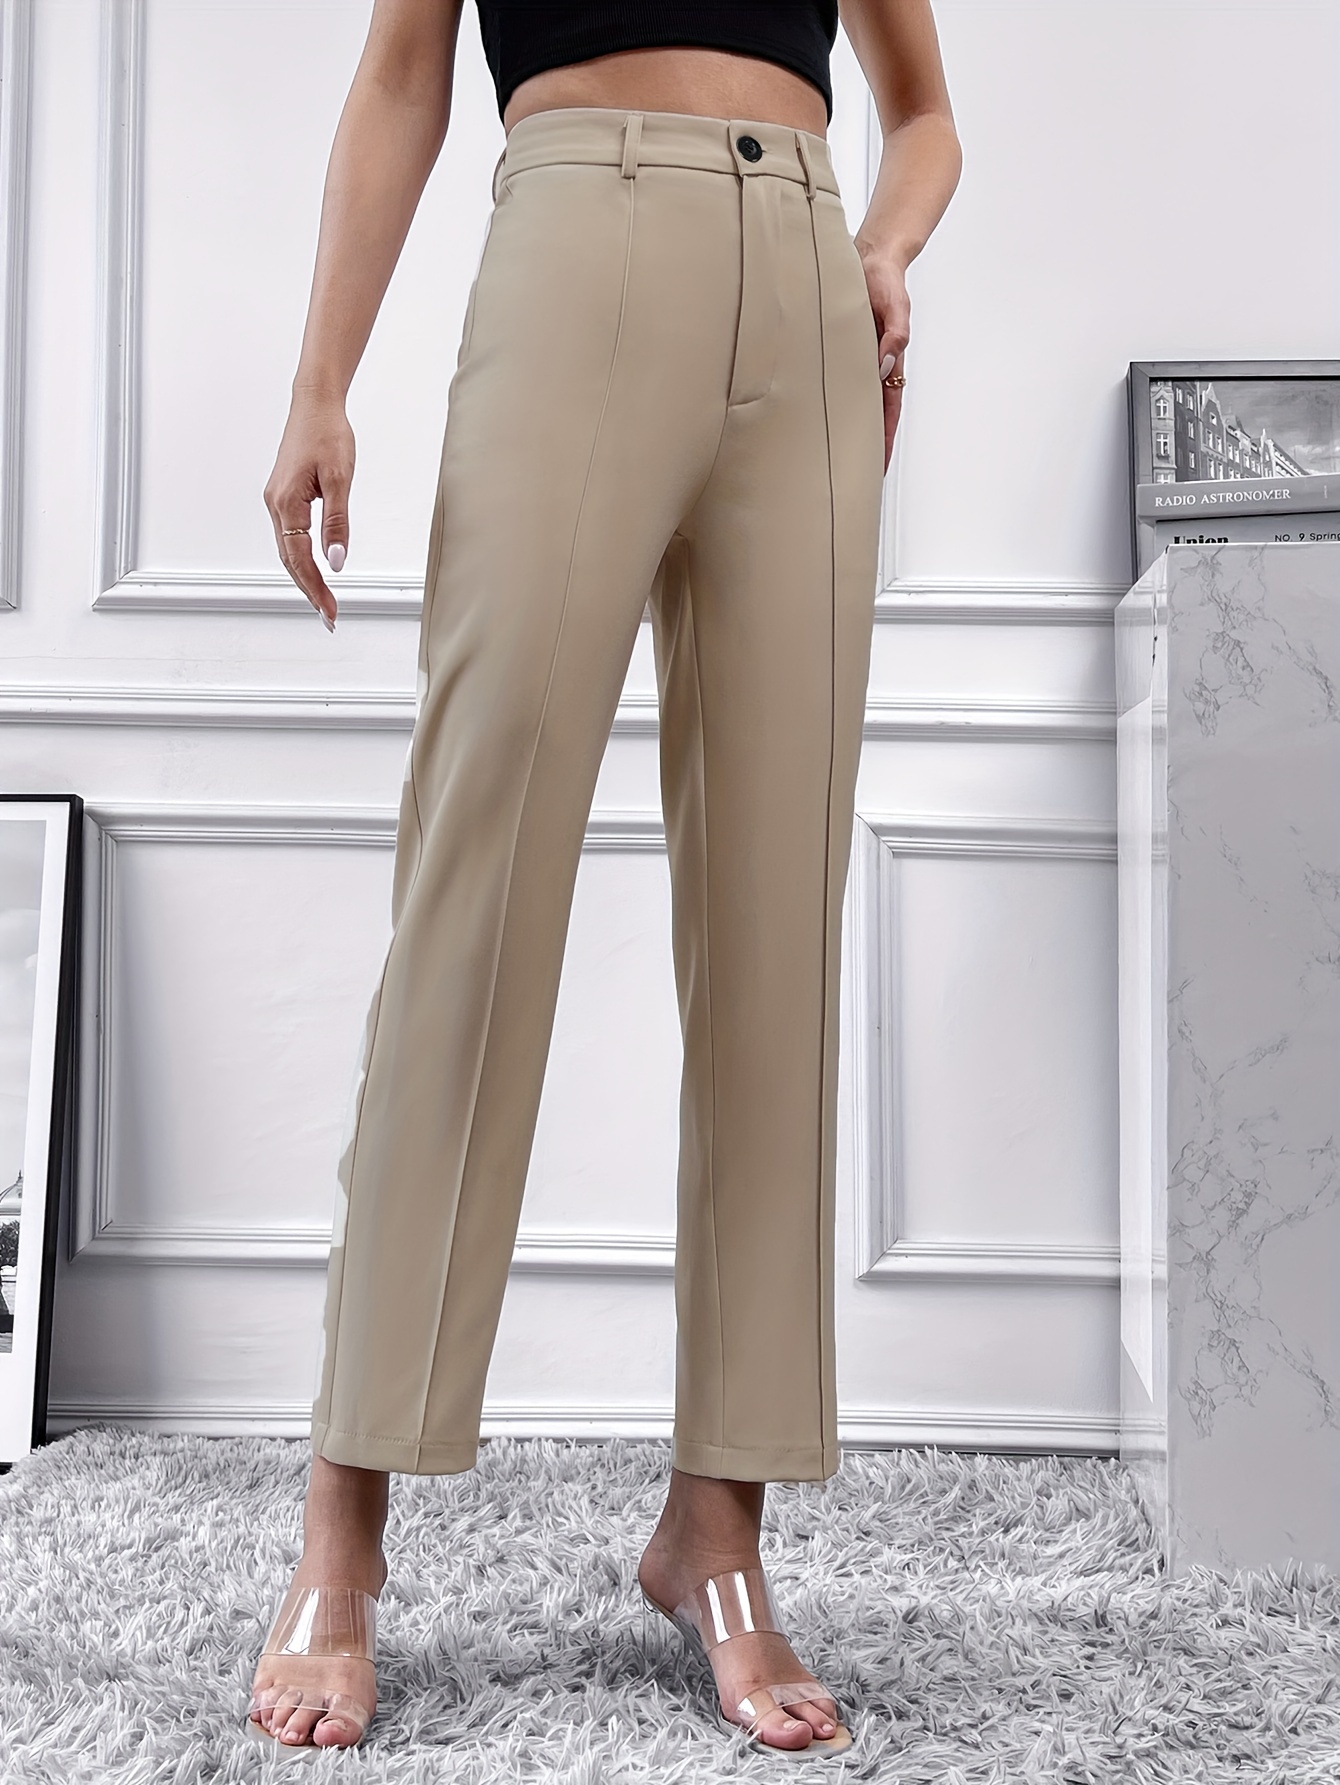 Pantalones talla Alta😍😍 ✓Precios - Olam Store Oficial